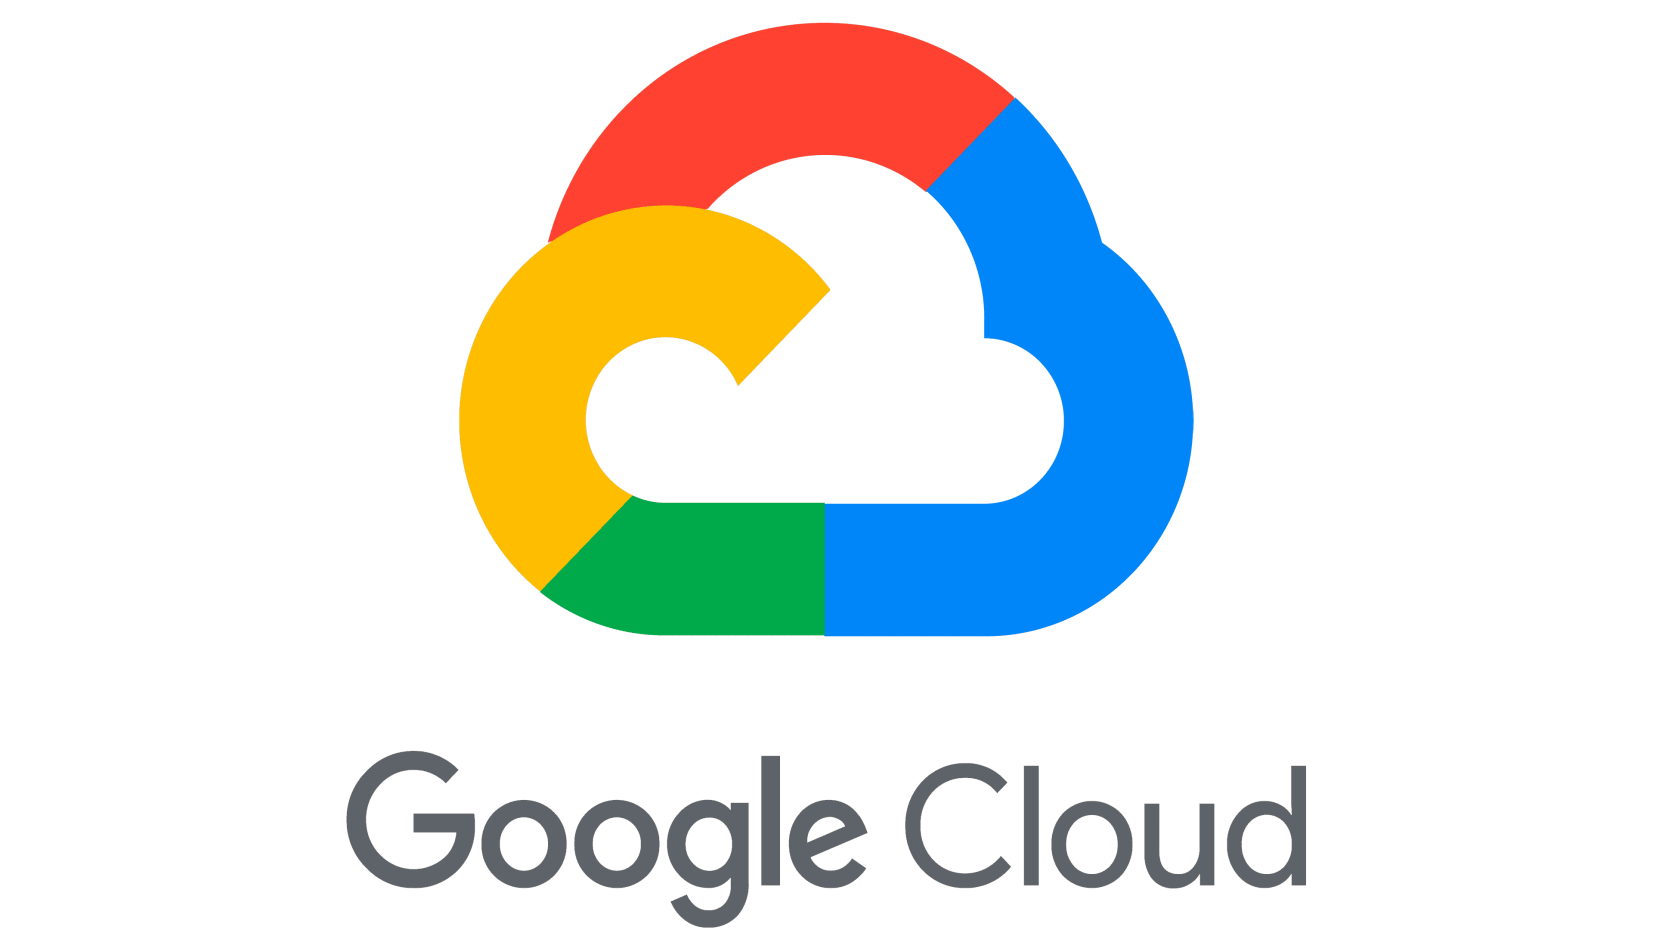 google cloud logo with text